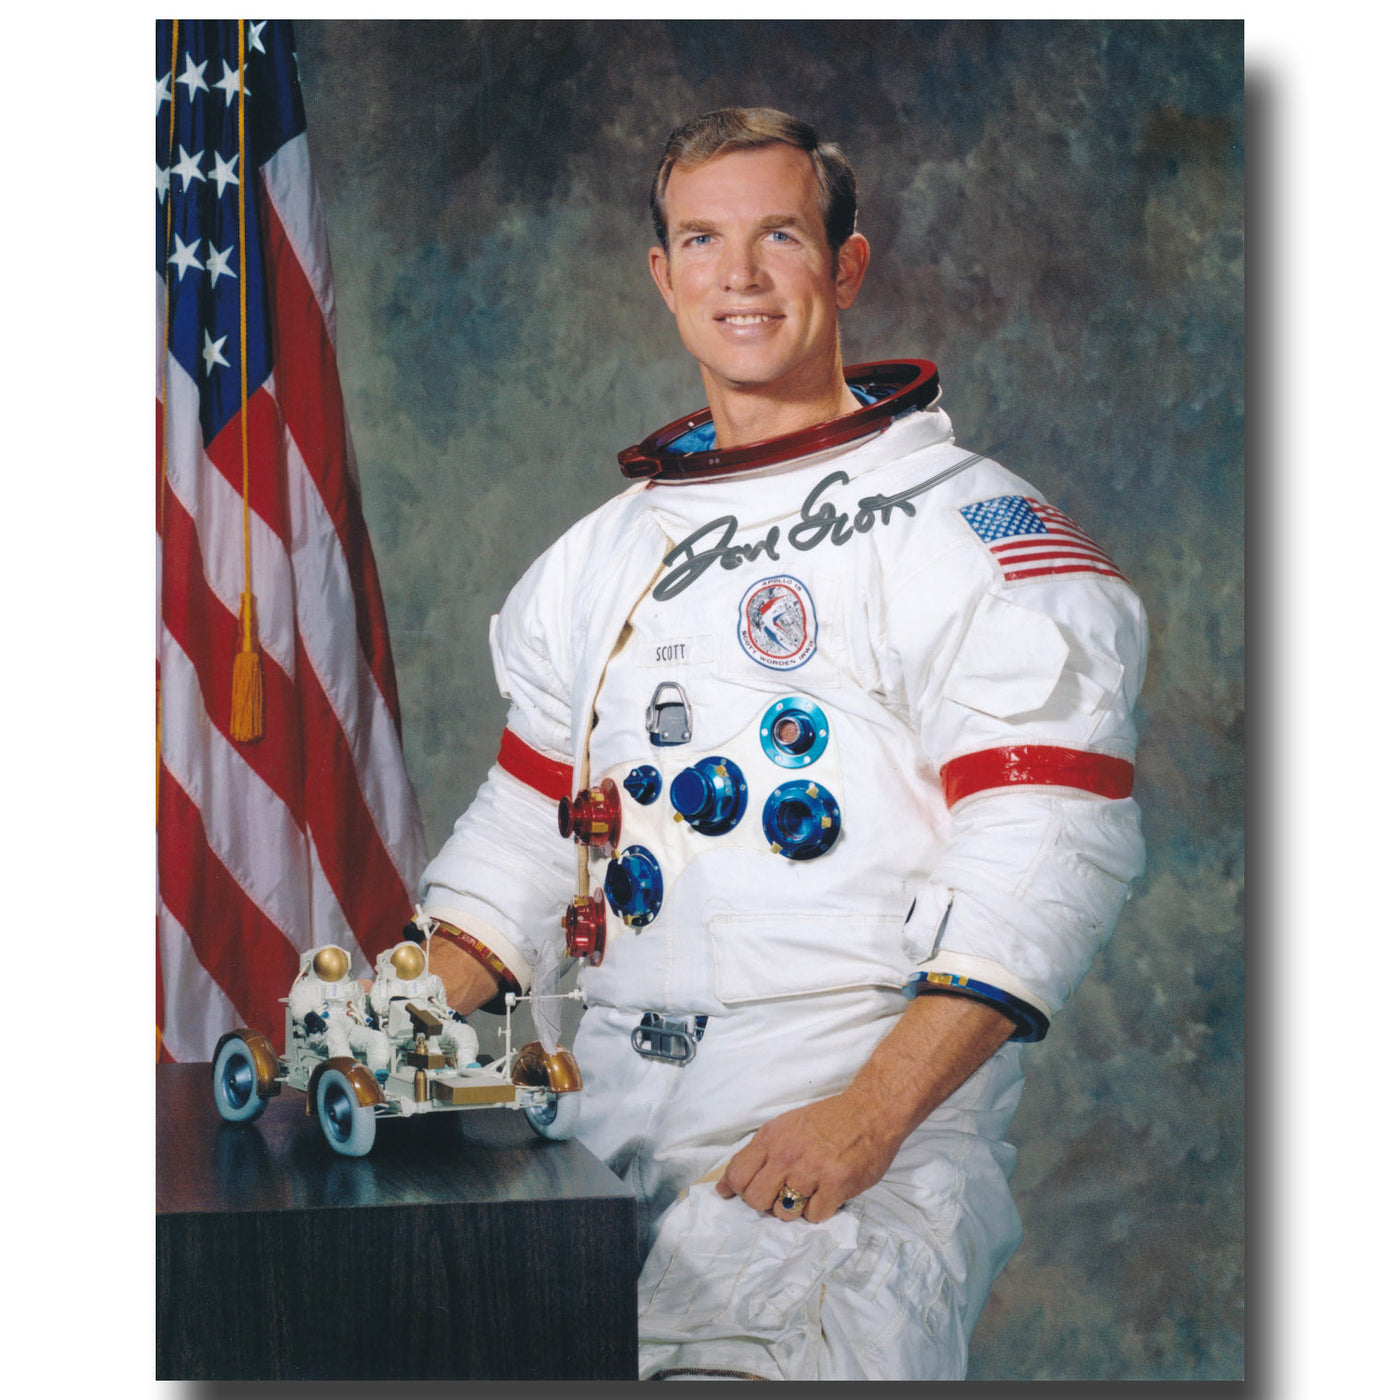 Dave Scott – Apollo 15 commander WSS portrait